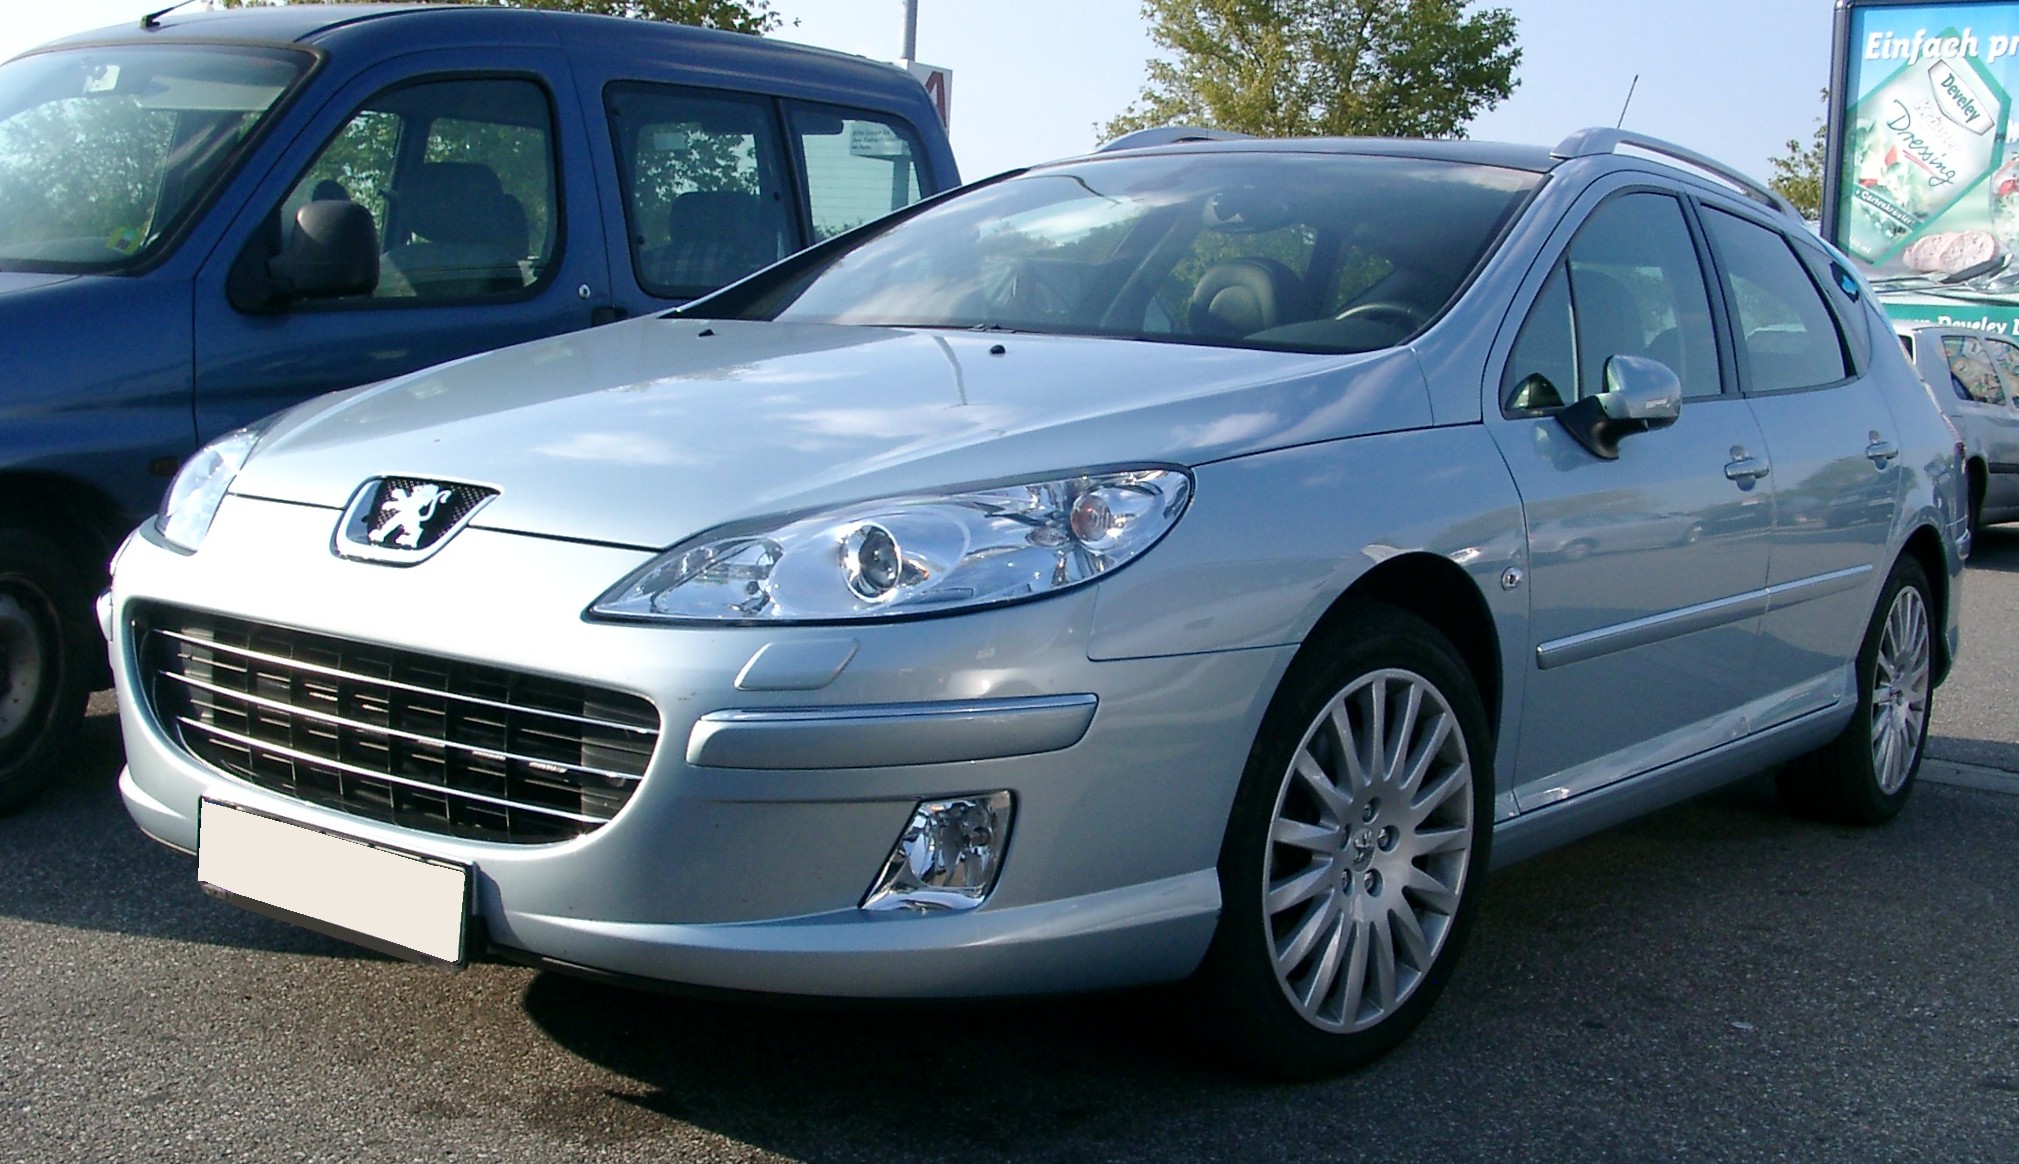 File:Peugeot 407 silver hr.jpg - Wikimedia Commons